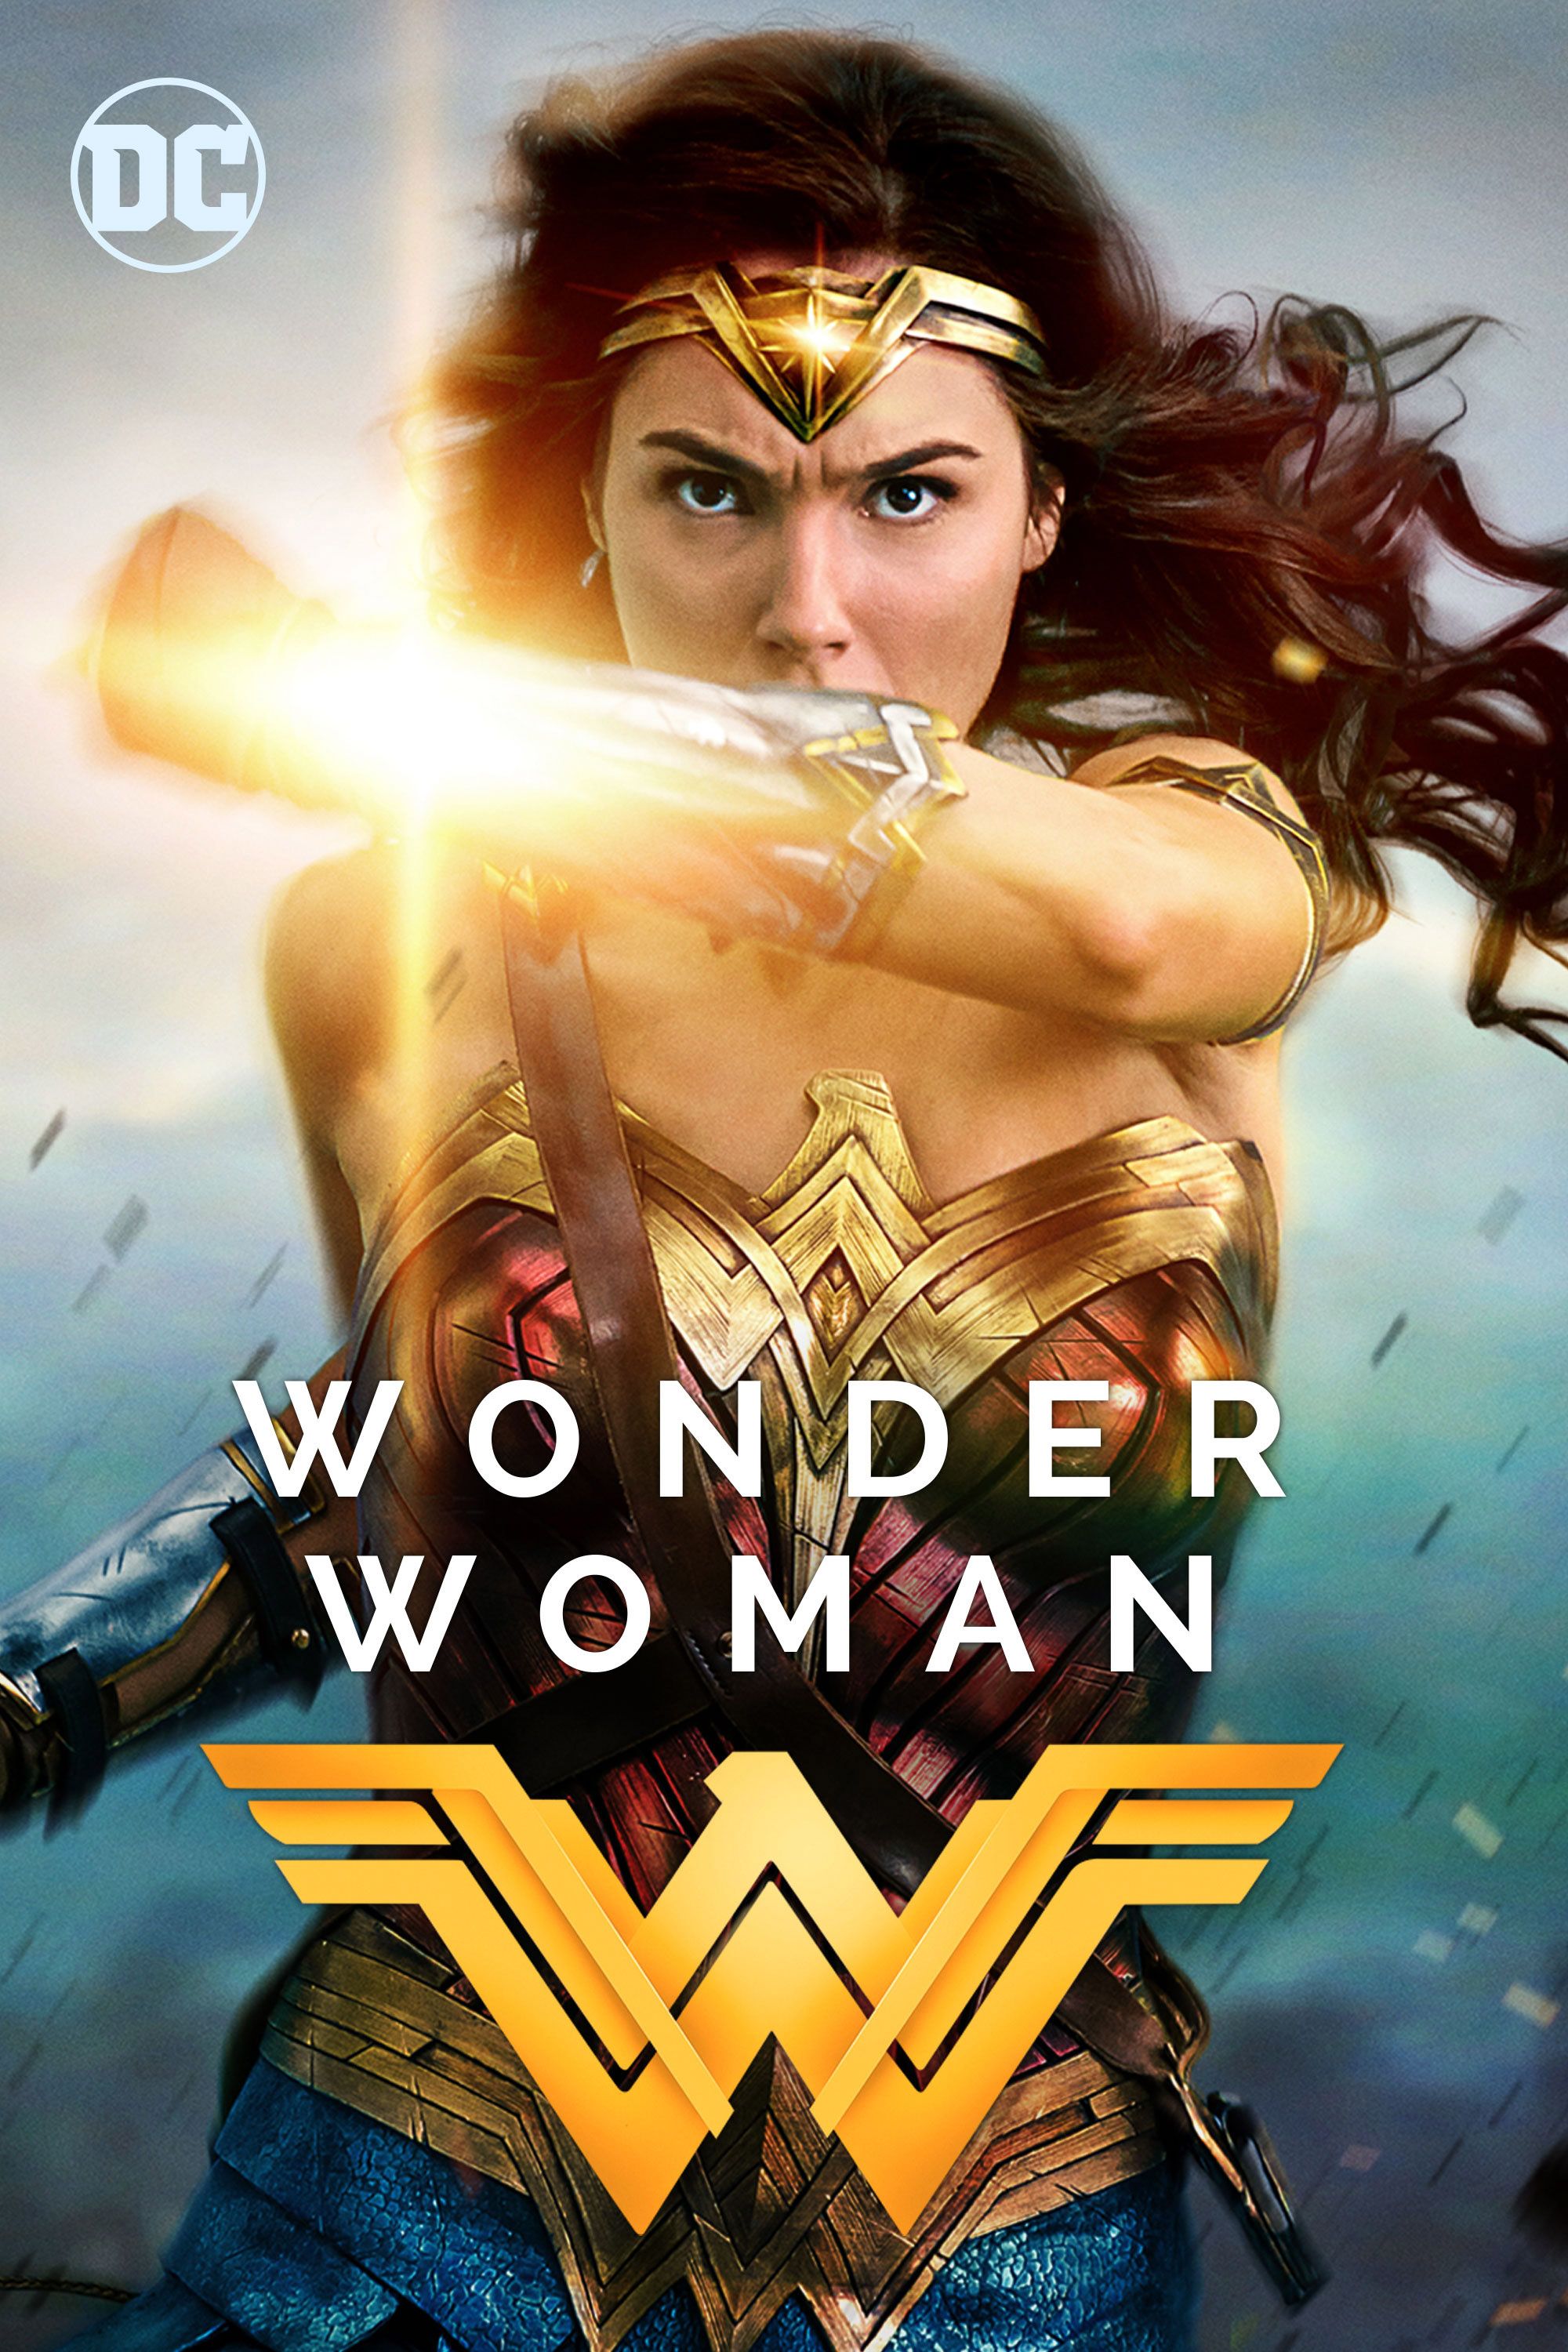 bryan buckingham recommends Wonder Woman Movie In Hindi Download